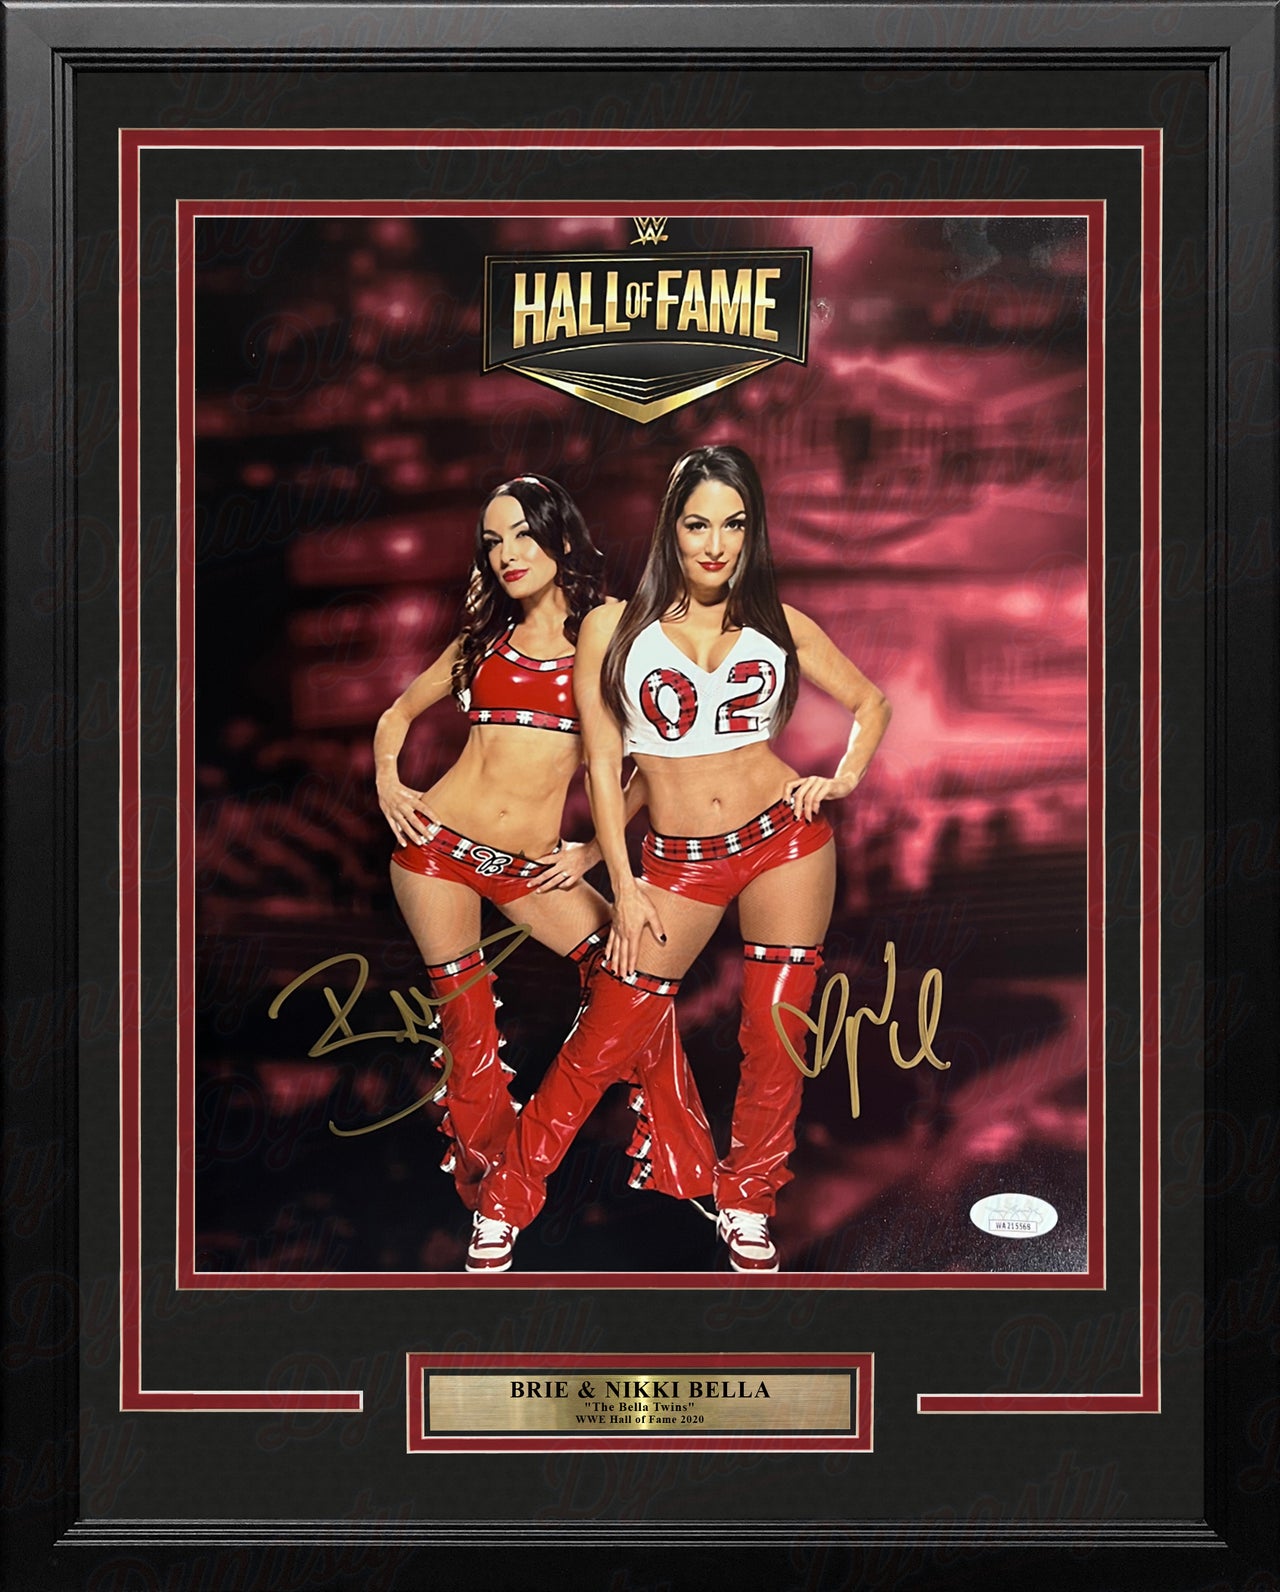 Brie & Nikki Bella Autographed Framed WWE Wrestling Bella Twins Collage Photo - Dynasty Sports & Framing 